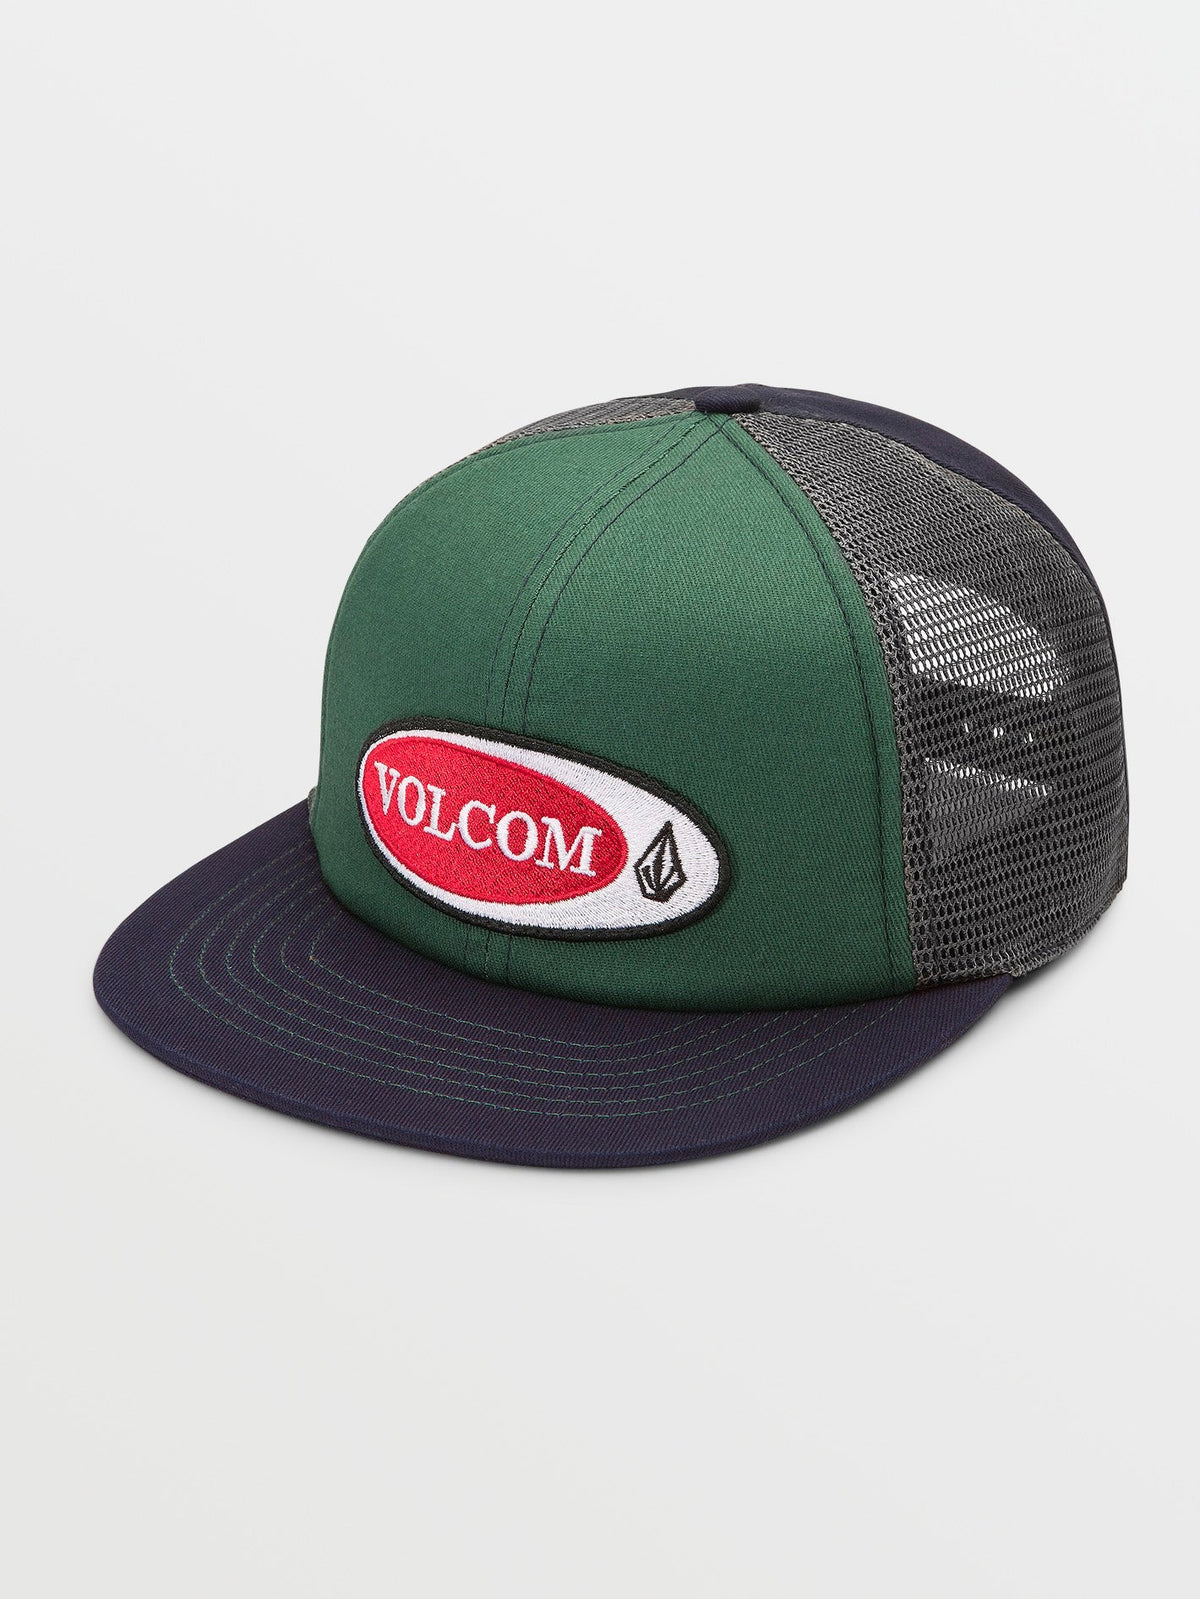 Volcom Oval It All Boys Trucker Hat (Age 8-14) Ranger Green